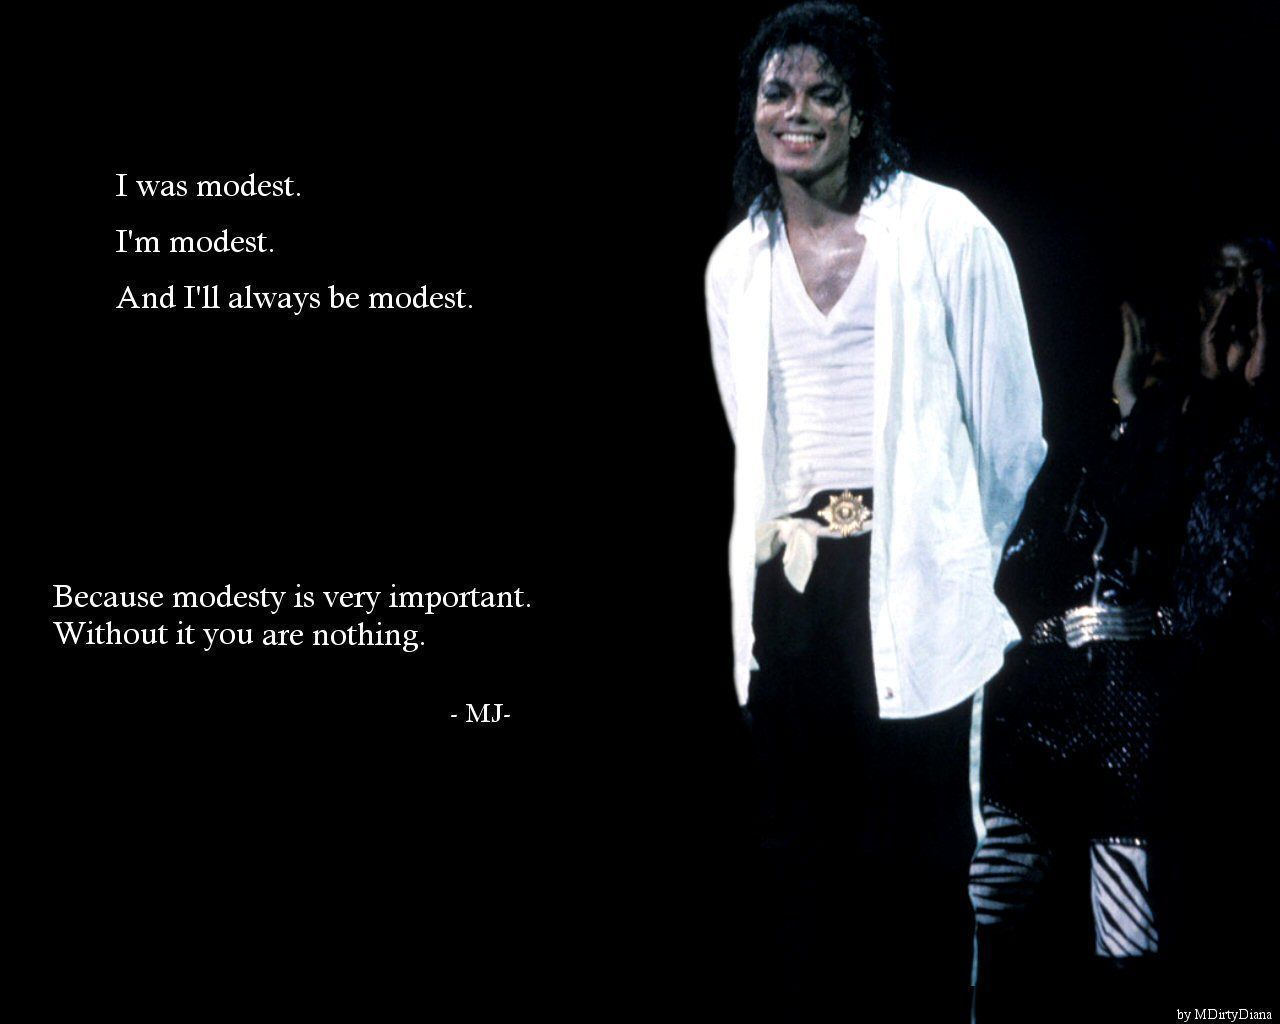 Michael Jackson MJ